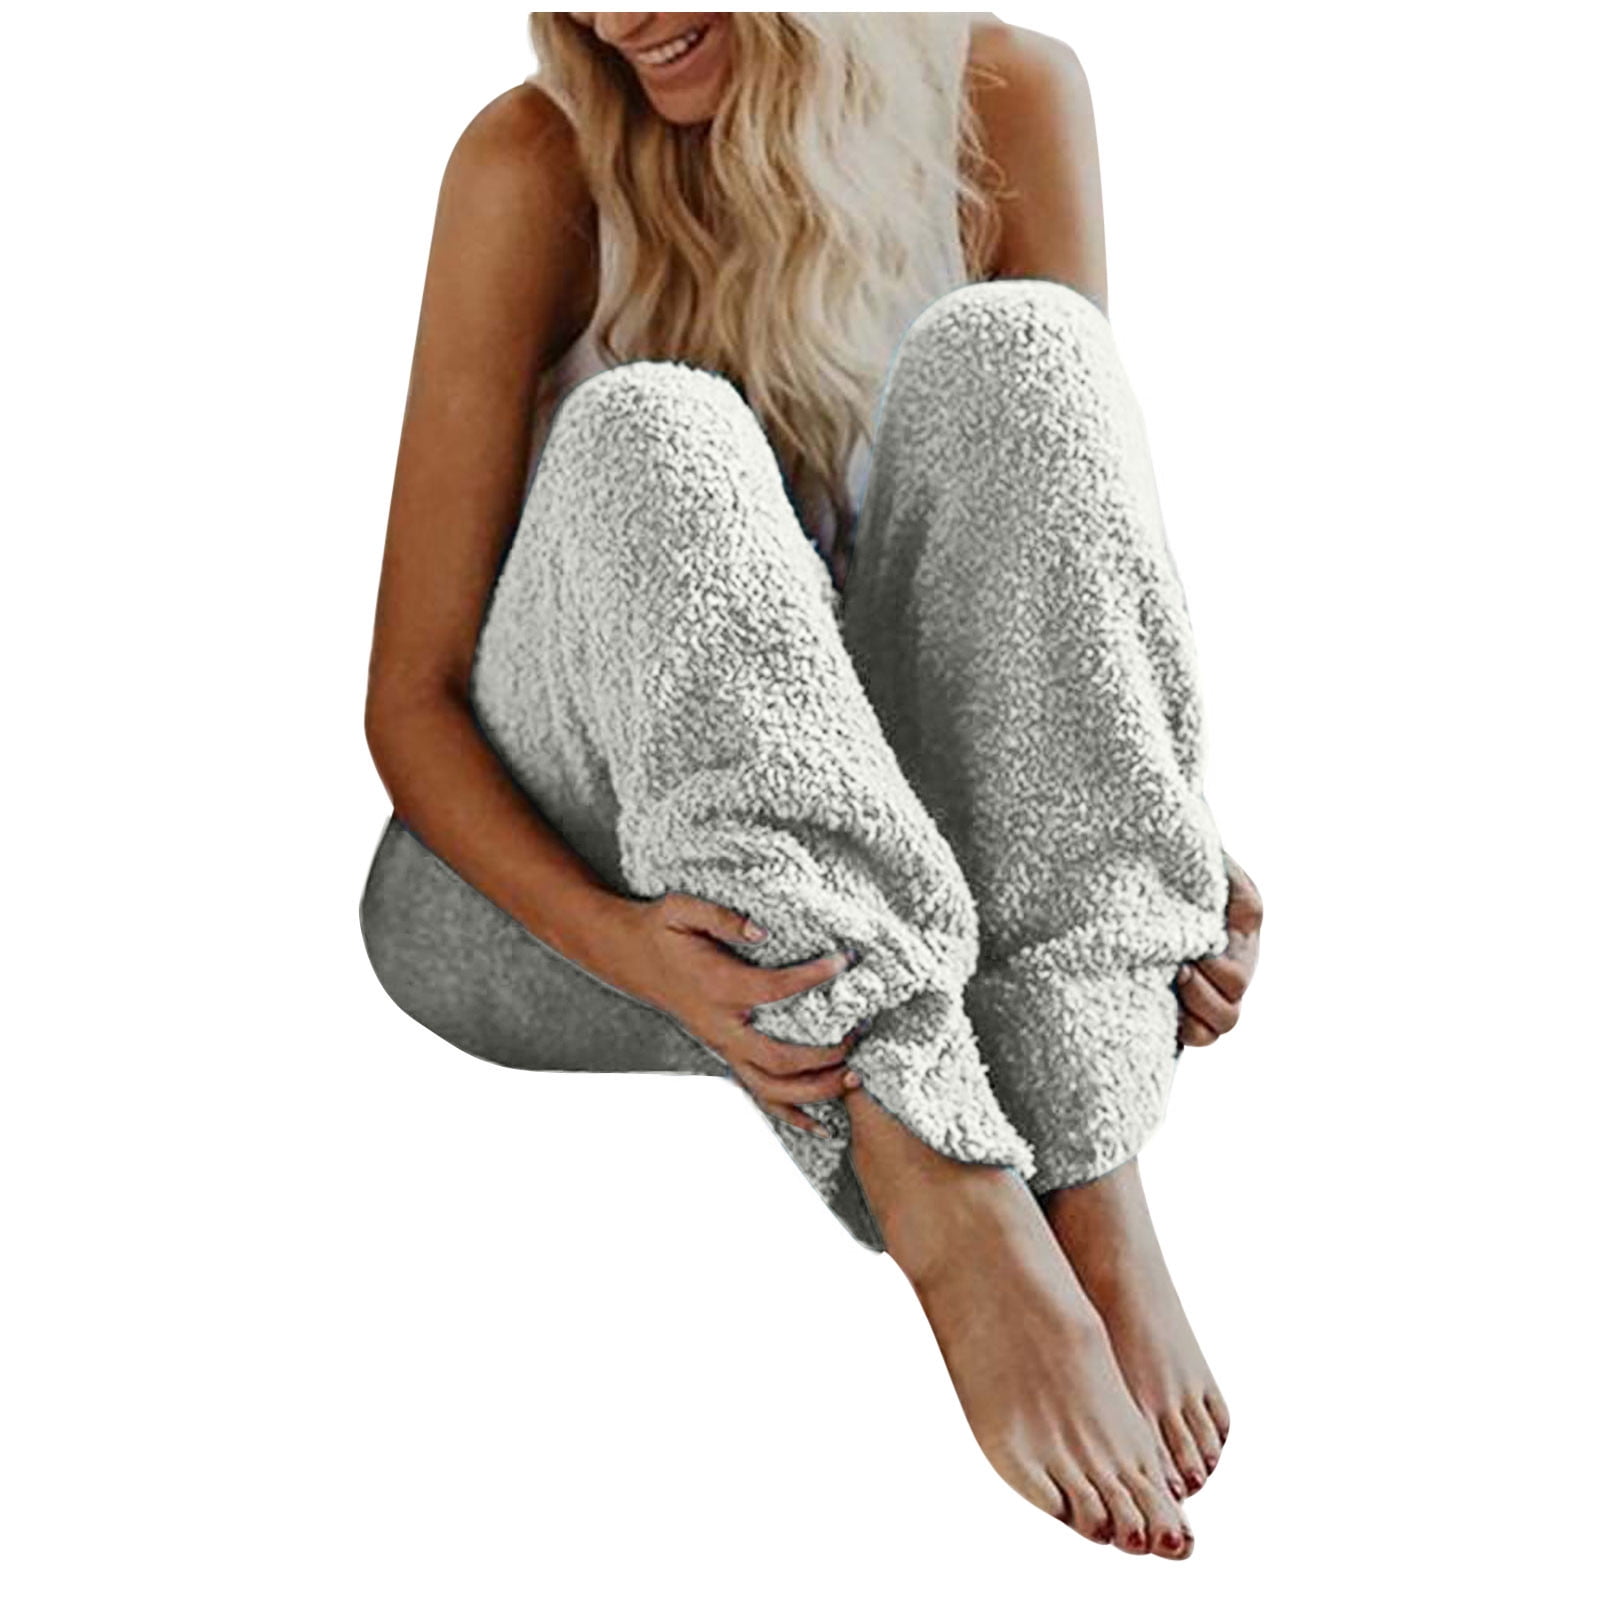 BLVB Womens Winter Cozy Lounge Pants Warm Soft Fuzzy Fleece Pajama Bottoms  Sleepwear Causal High Waisted Pjs Pants Loungewear 